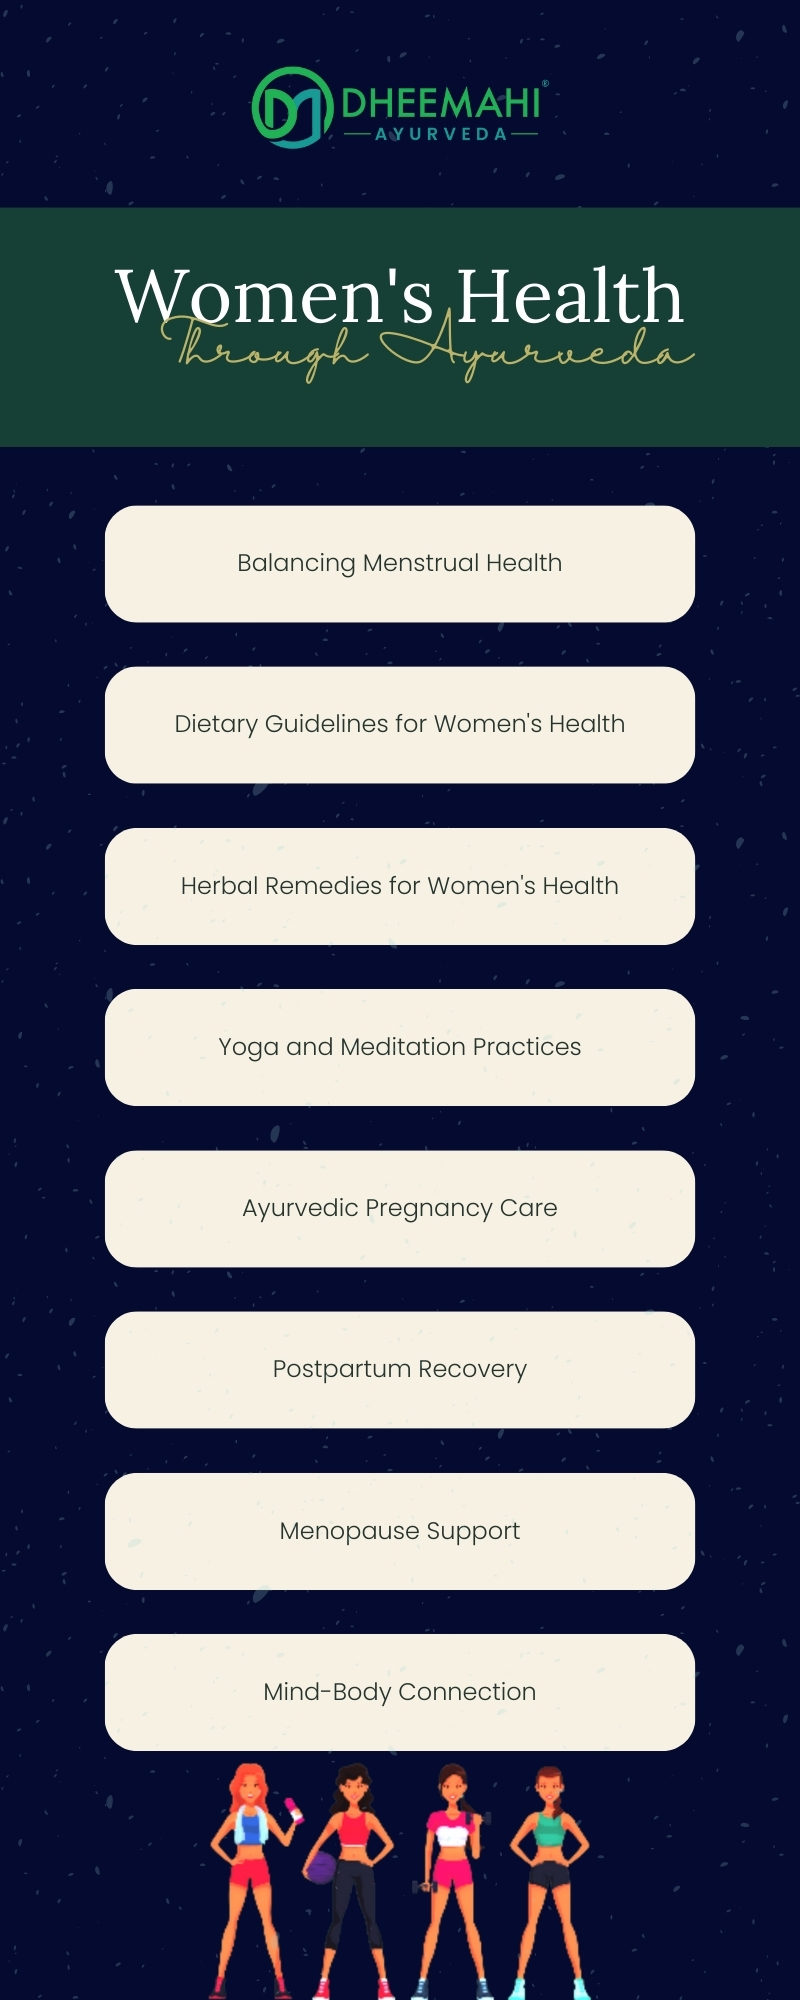 Women's Health Through Ayurveda